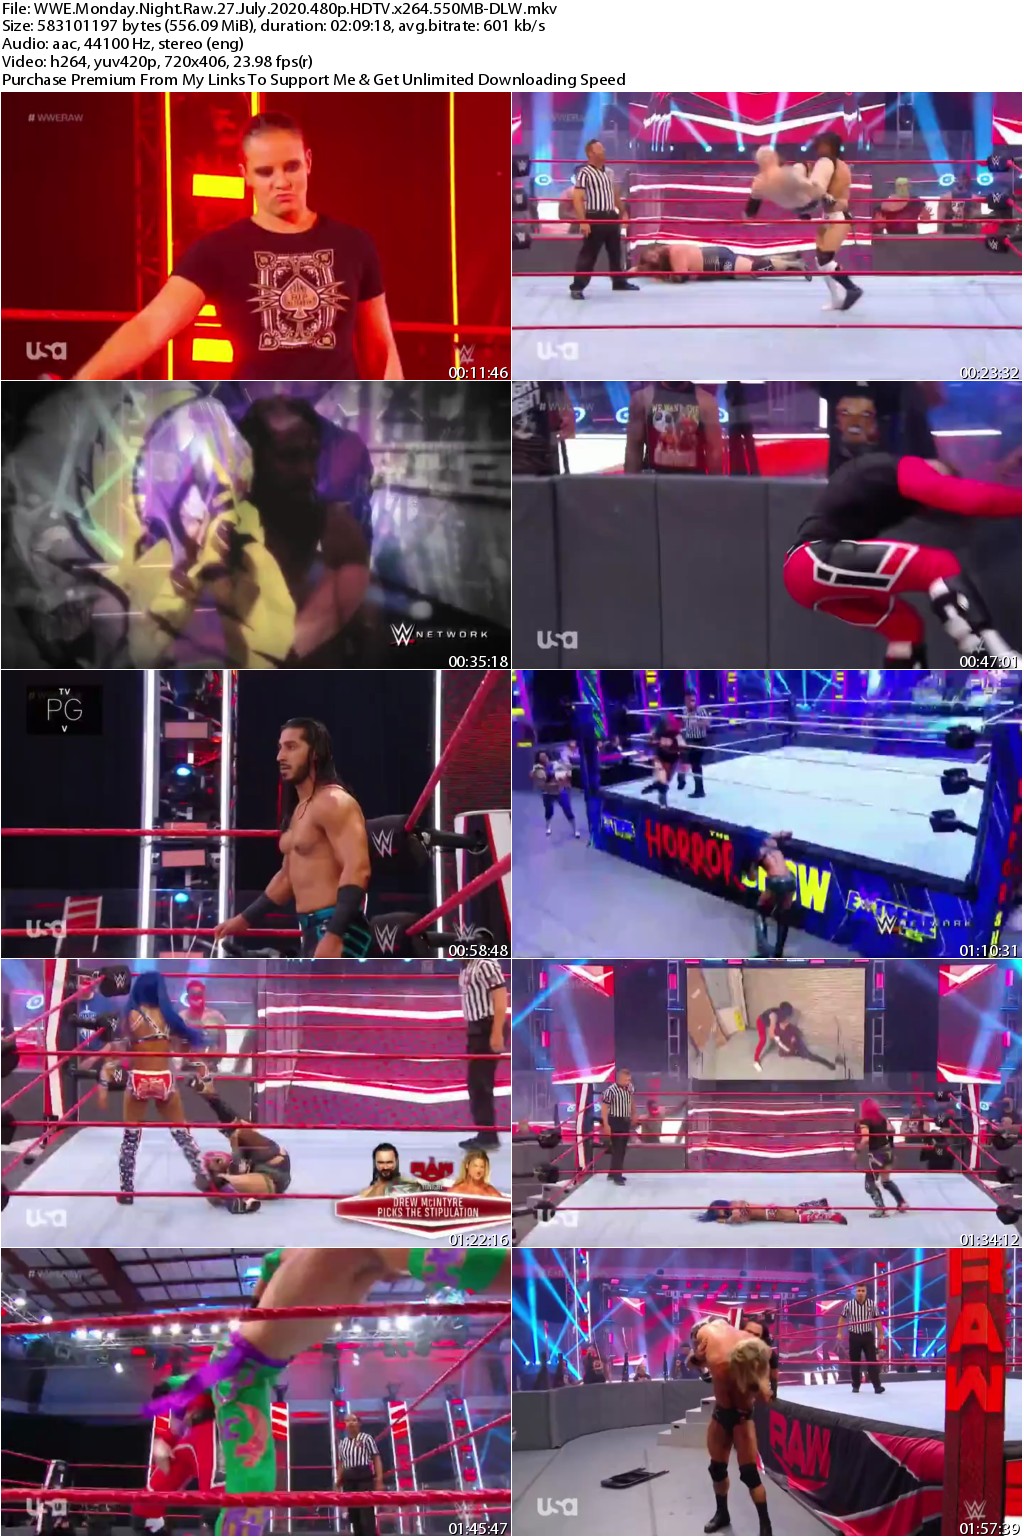 WWE Monday Night Raw 27 July 2020 480p HDTV x264 550MB-DLW